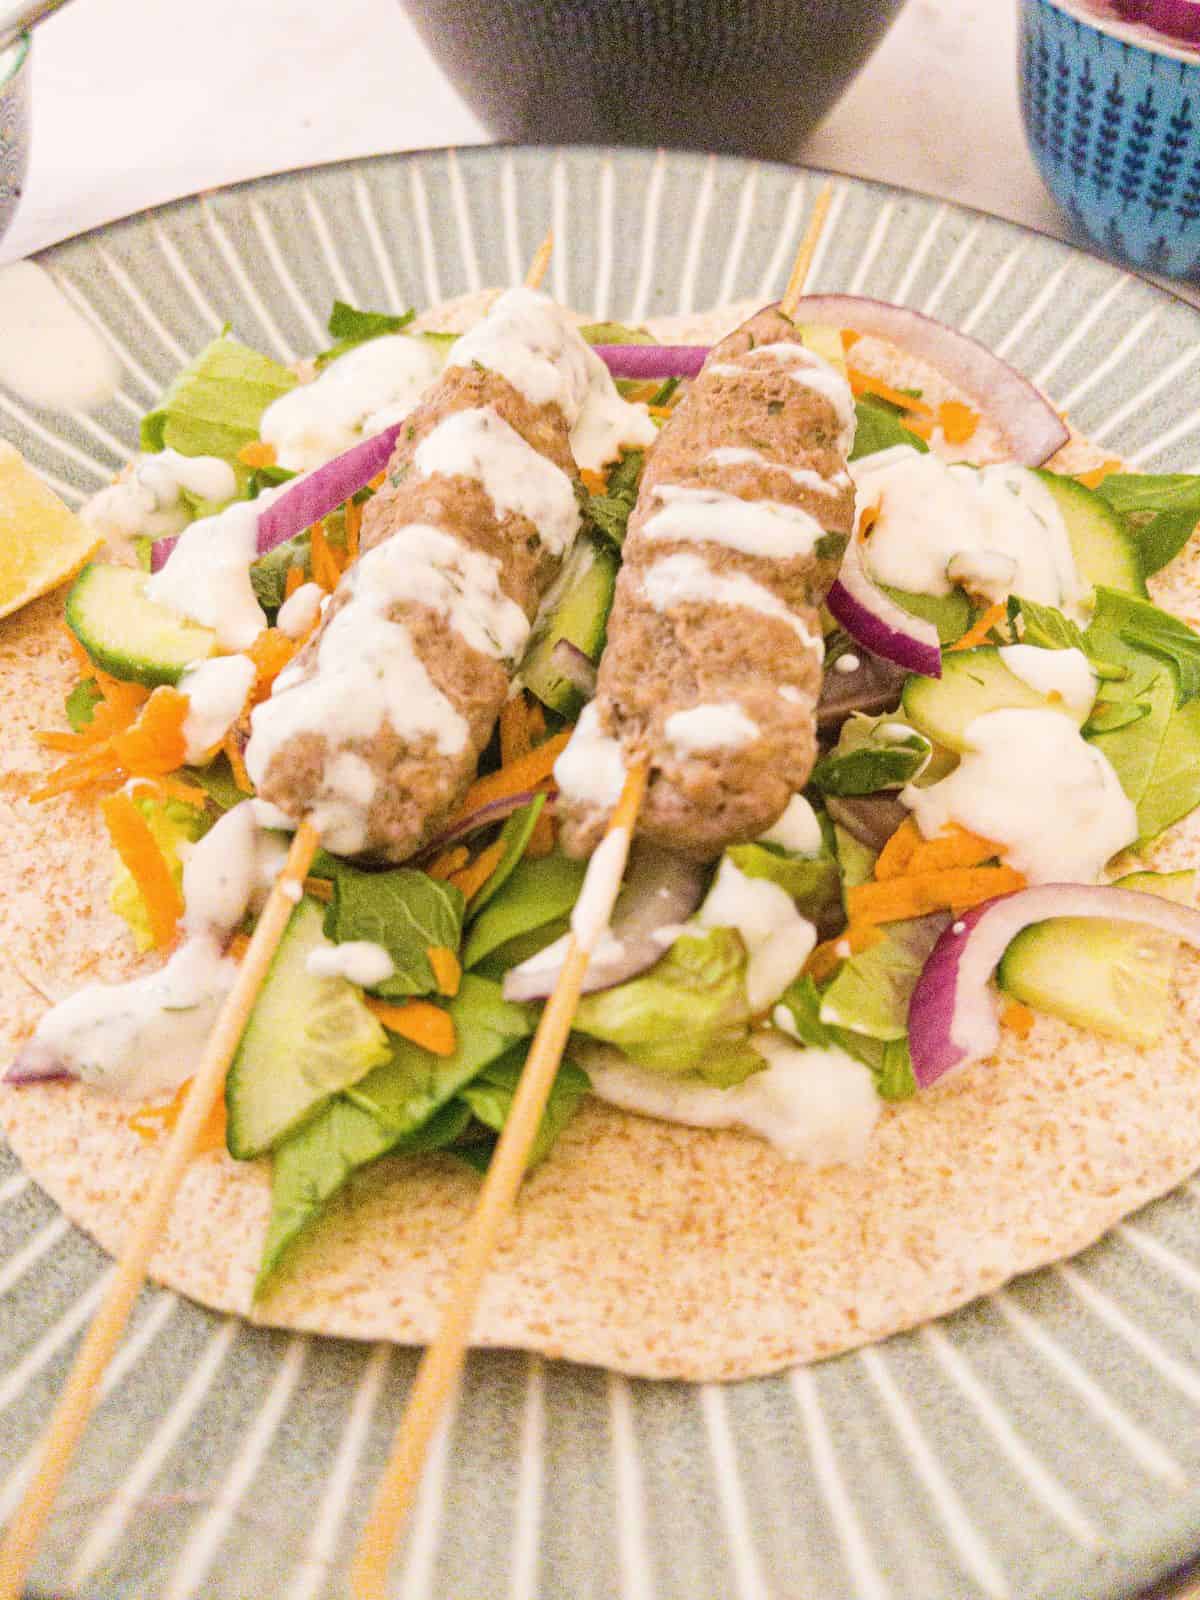 Lamb kofta kebab and salad on a blue stripy plate.